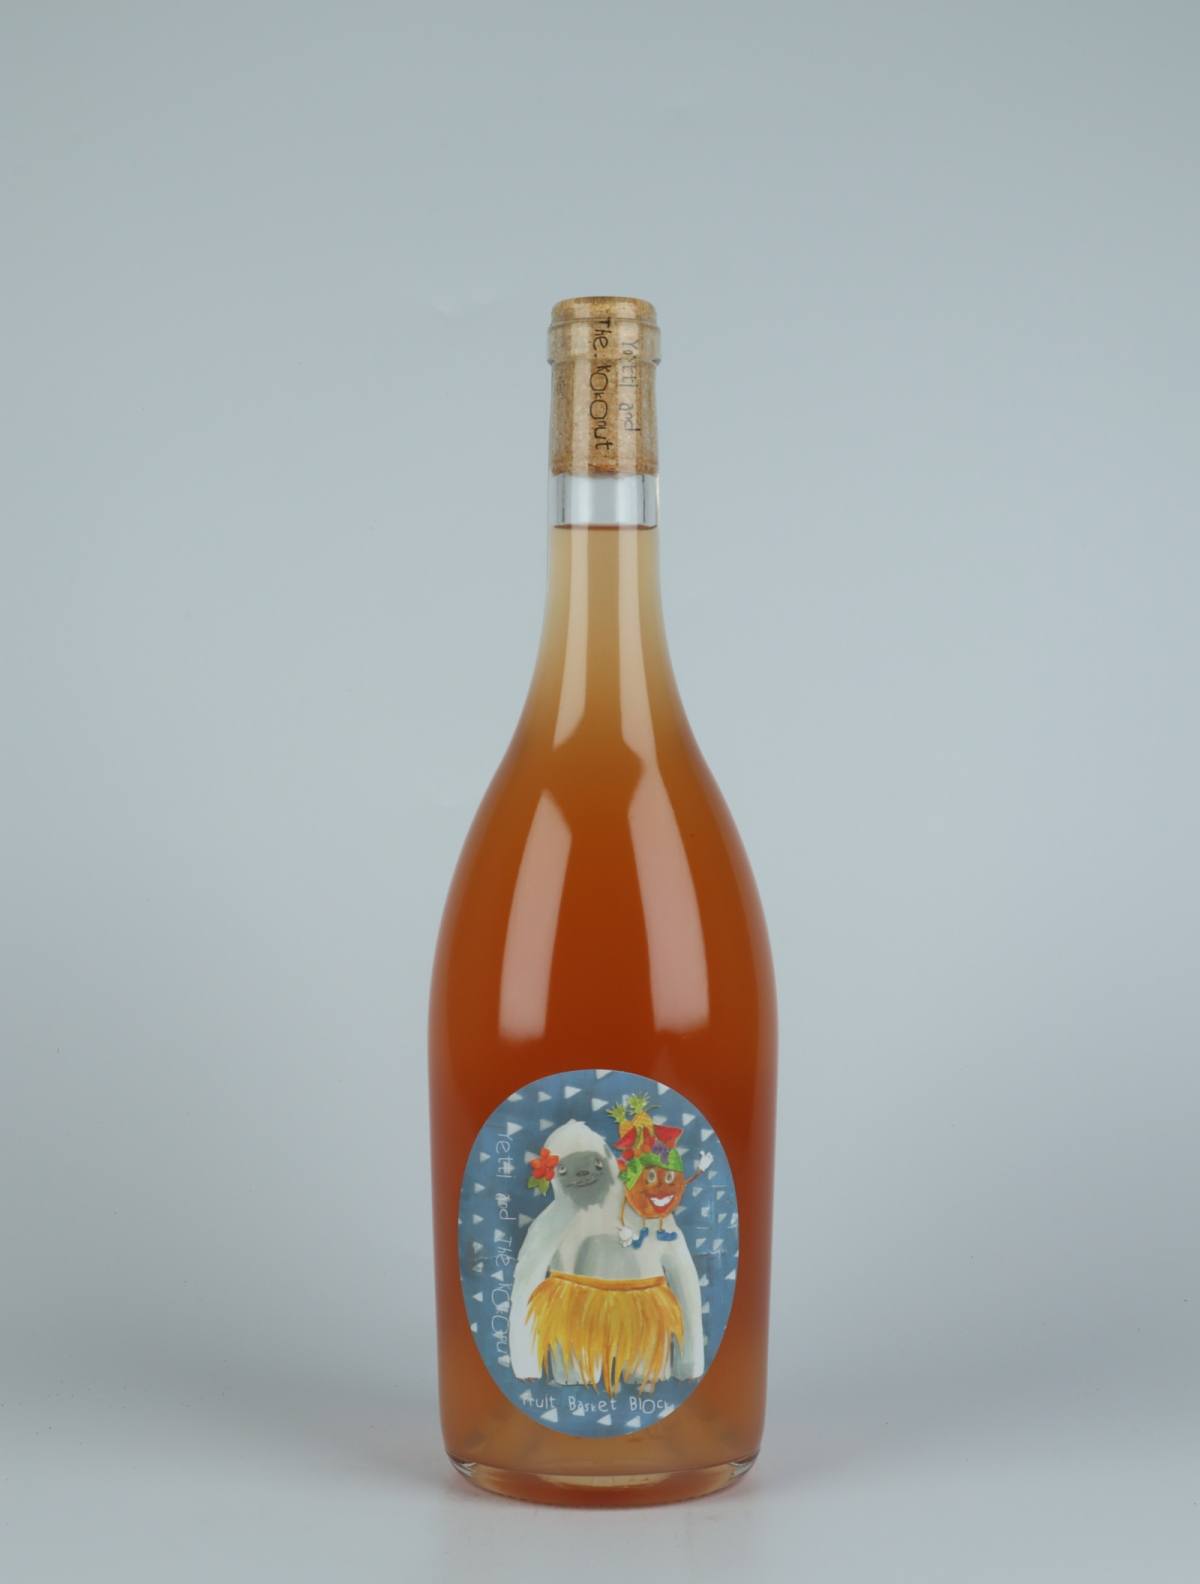 A bottle 2021 Fruit Basket 2.0 Orange wine from Yetti and the Kokonut, Adelaide Hills in Australia